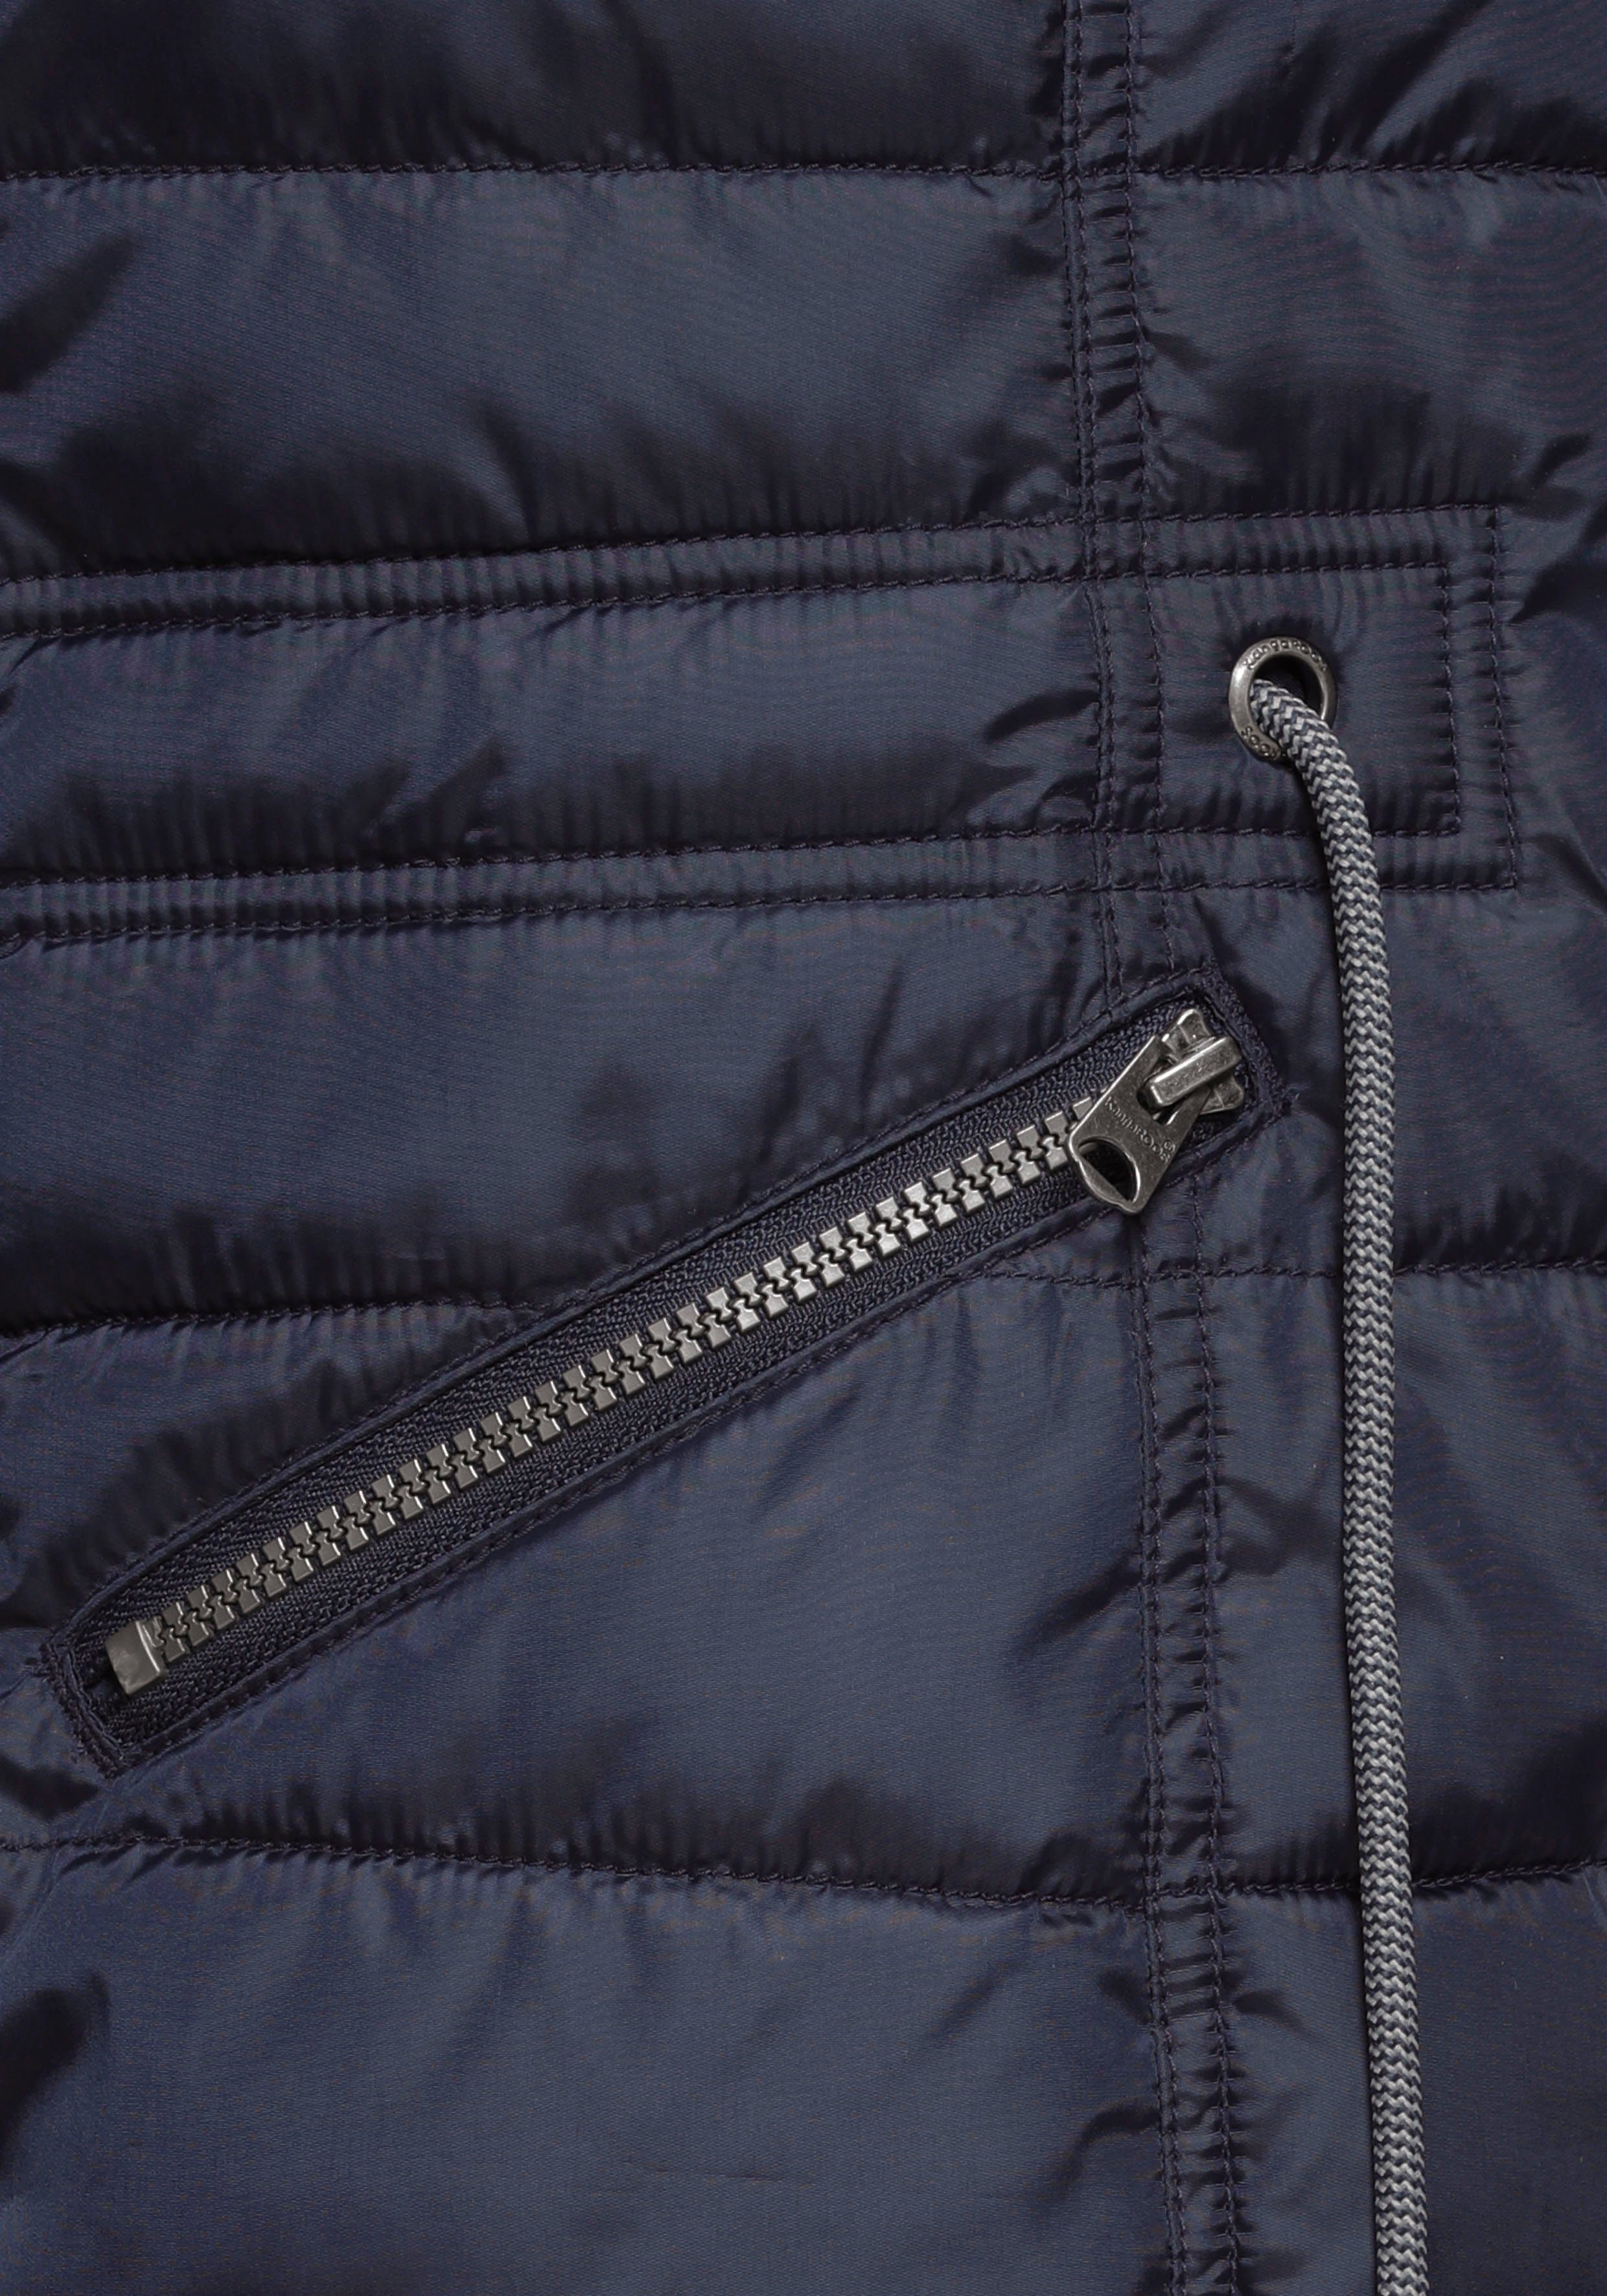 KangaROOS Steppjacke mit kuscheligem, abnehmbarem aus Material) blau Kapuze an (Jacke der nachhaltigem Fellimitat-Kragen